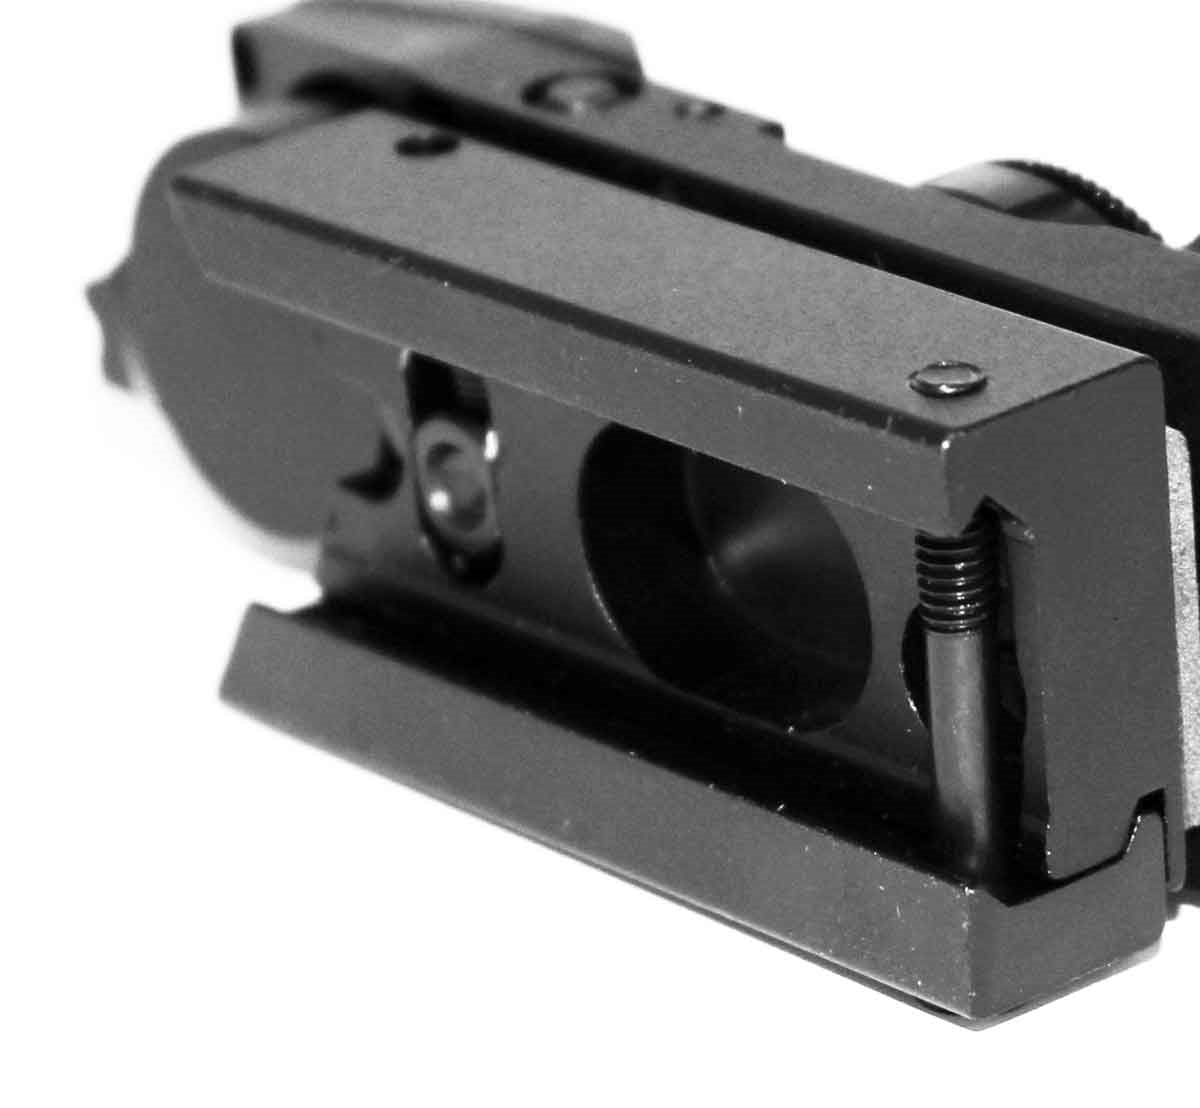 Trinity shotgun reflex sight for Mossberg 590 a1 magpul hunting tactical home defense. - TRINITY SUPPLY INC